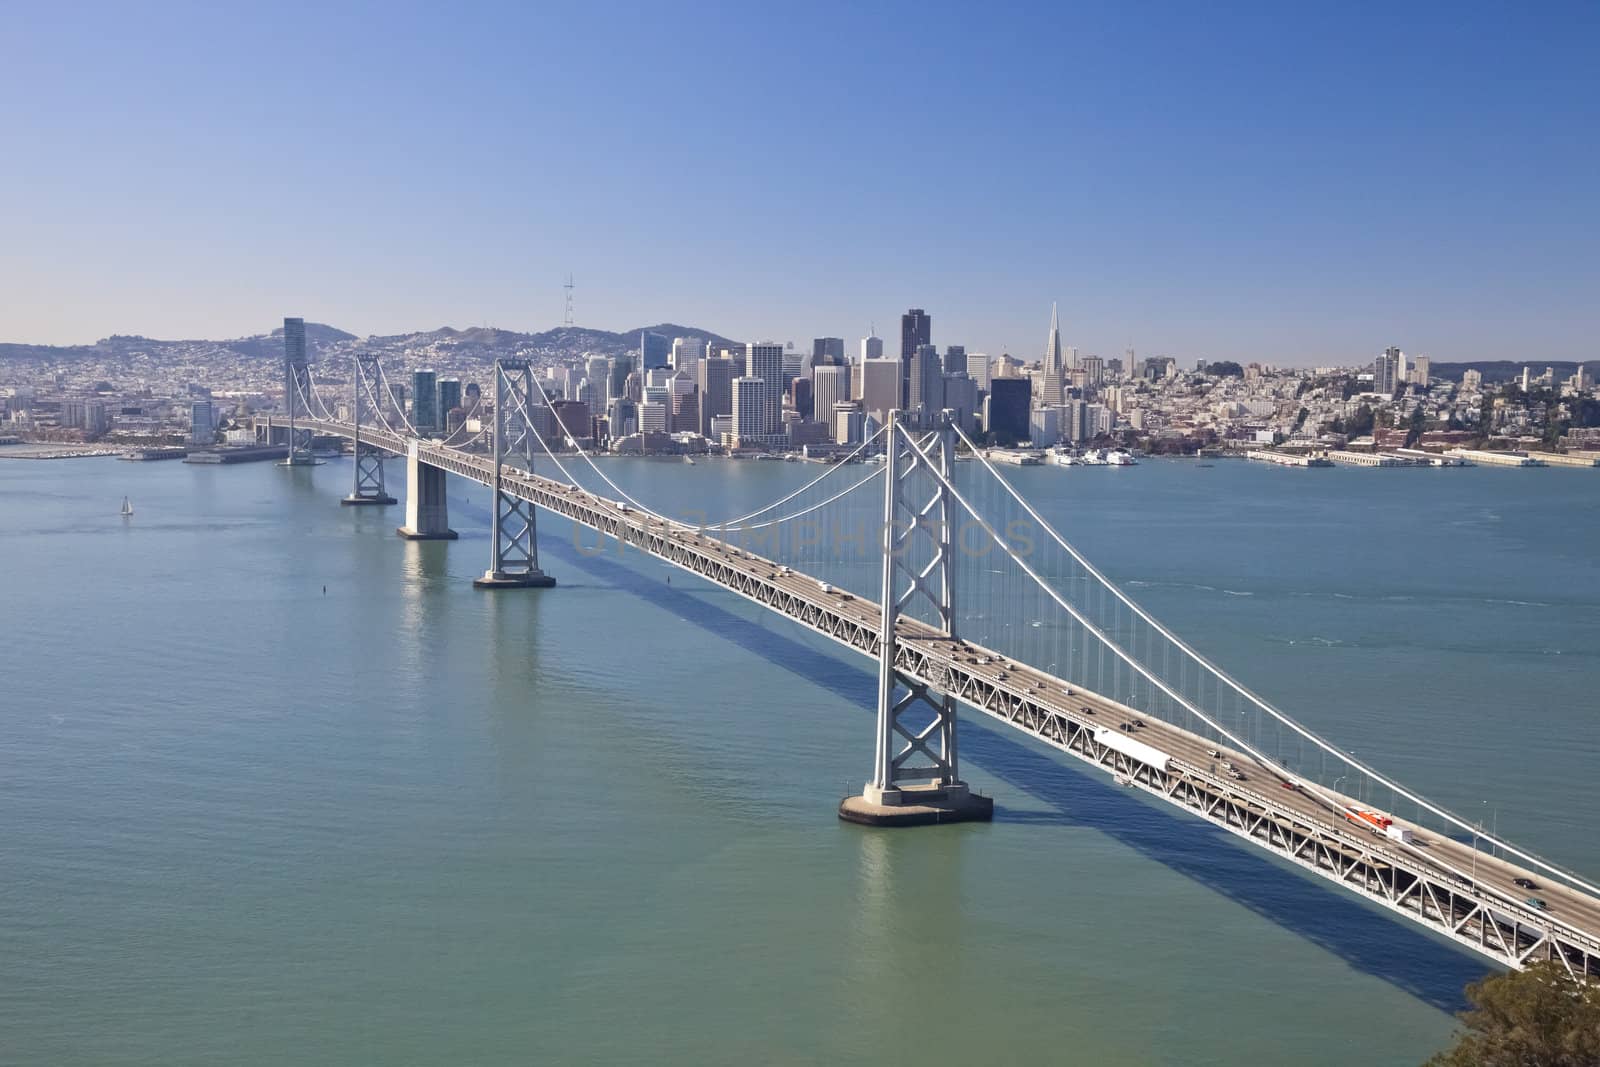 San Francisco Bay bridge aerial view by hanusst